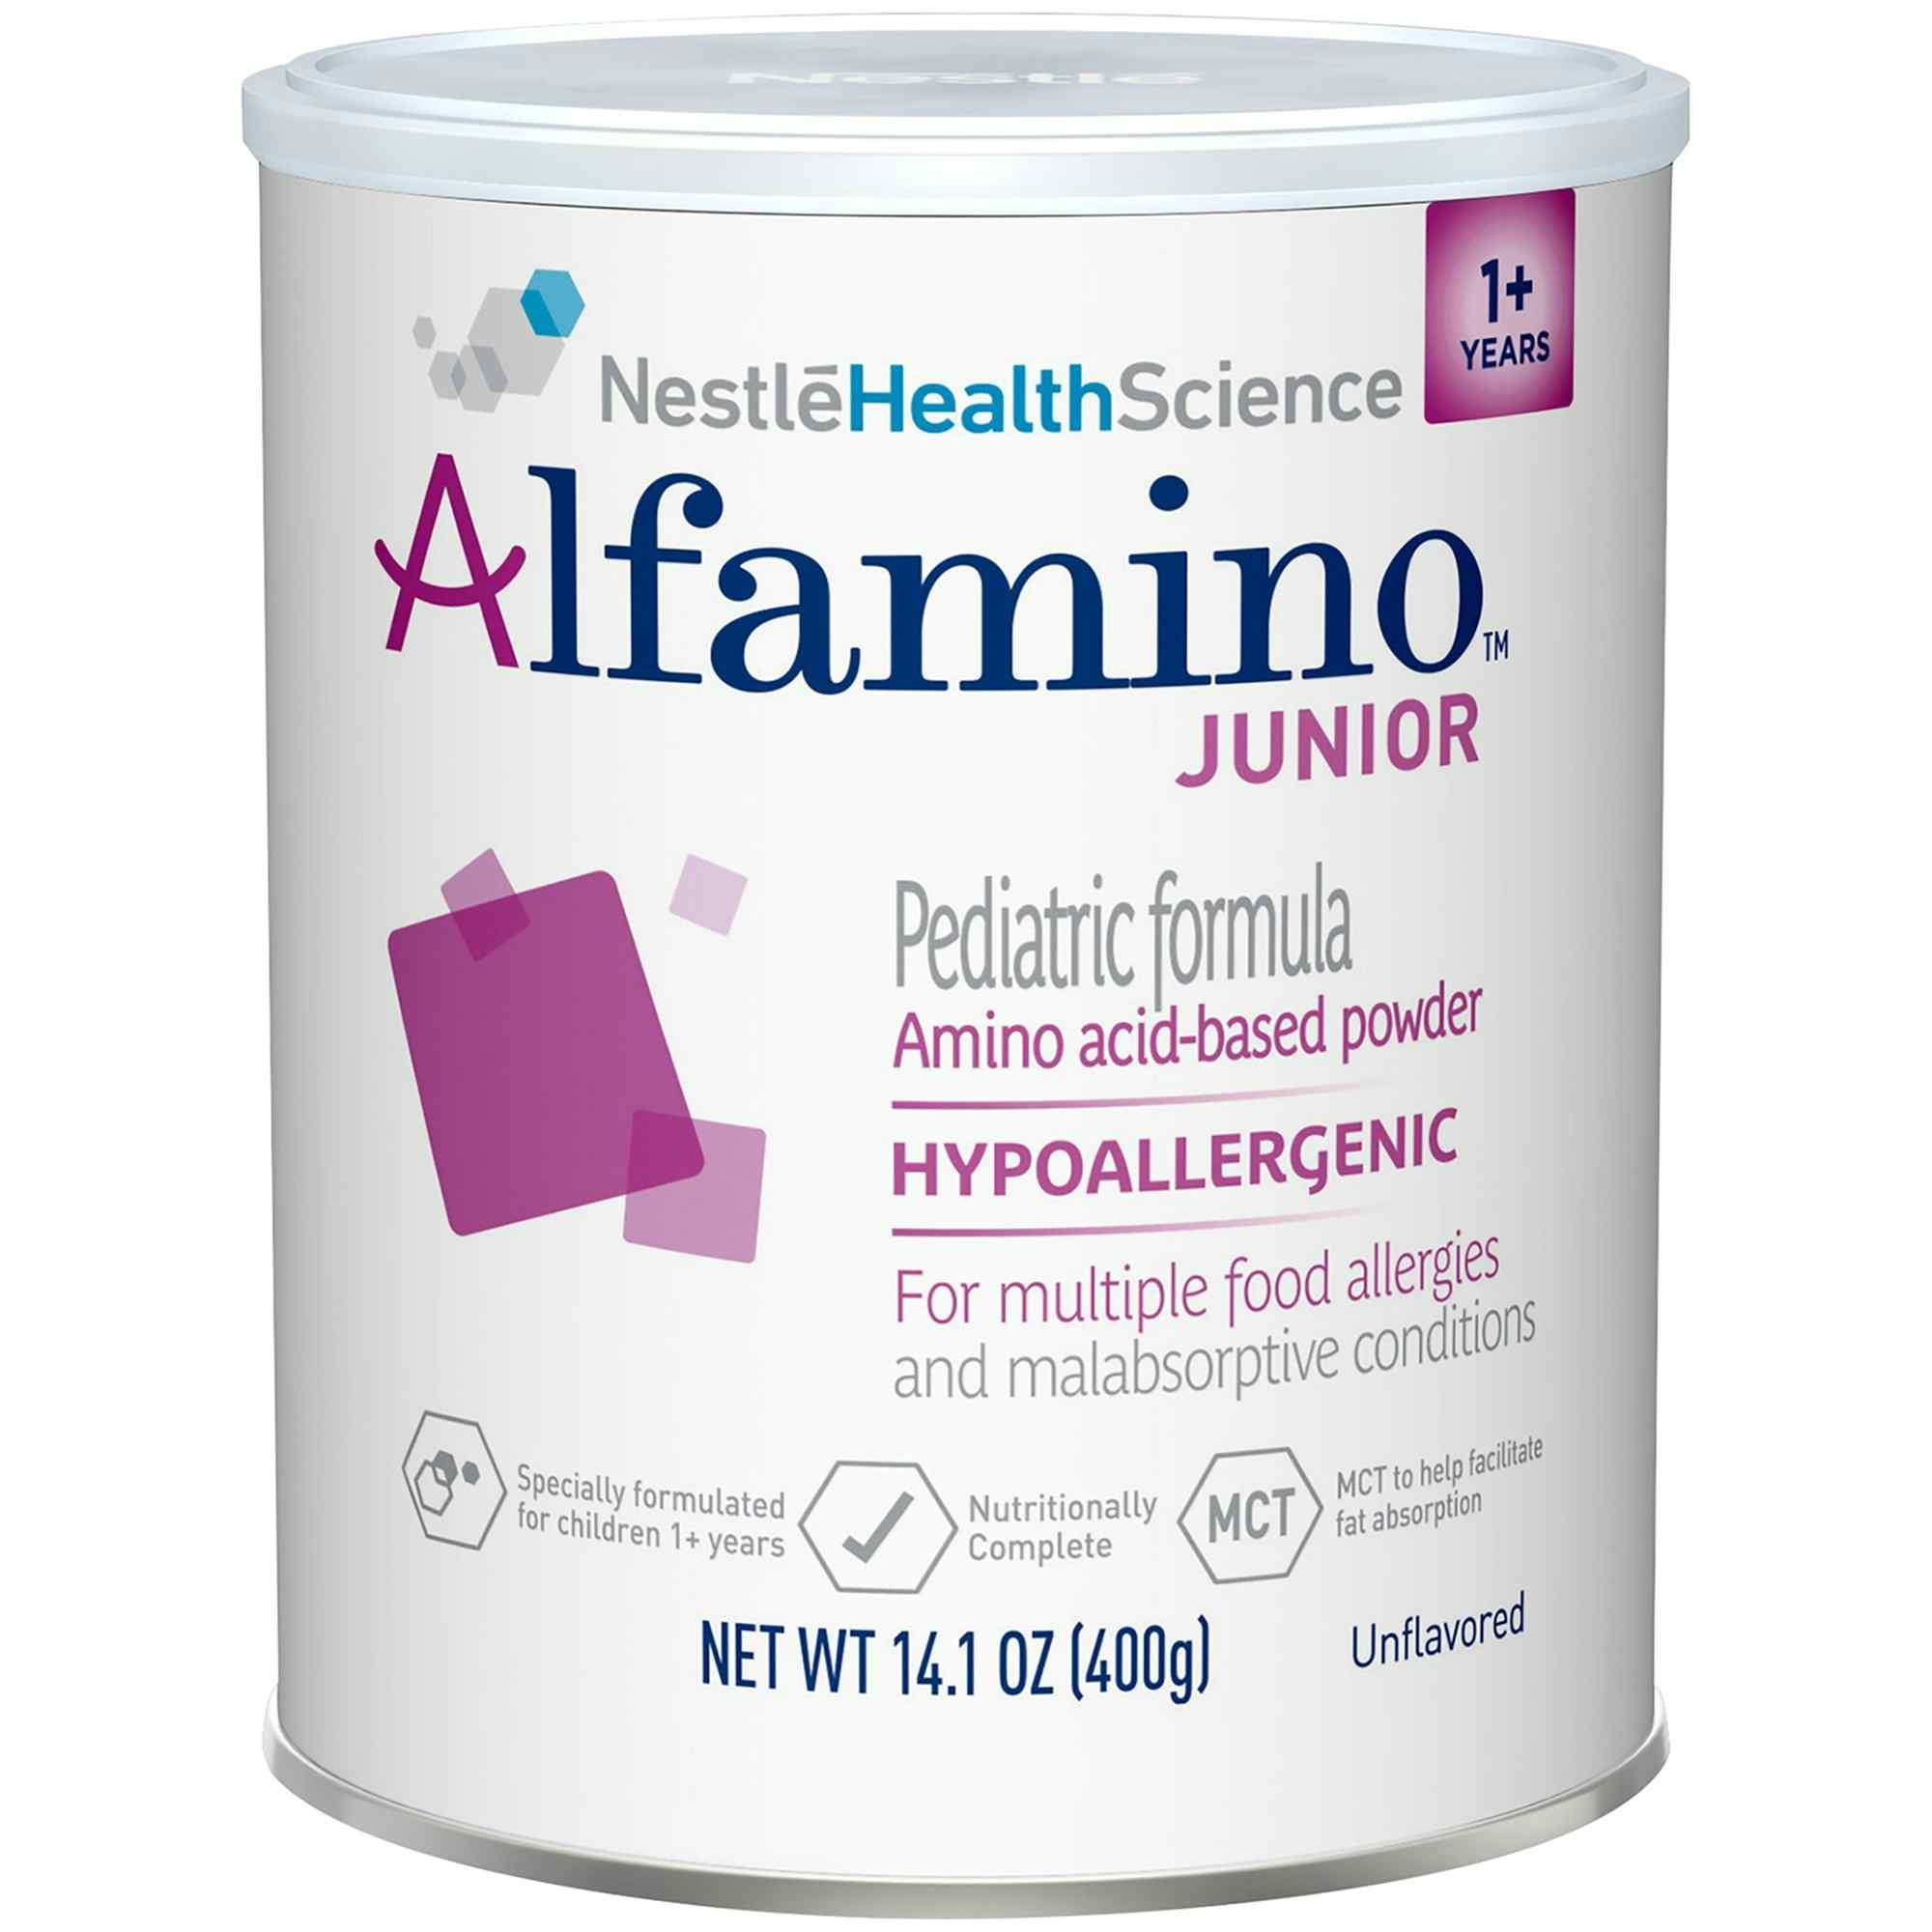 NestleHealthScience Alfamino Junior Pediatric Formula Amino Acid-Based Powder, 14.1 oz, 07613034787965, 1 Each